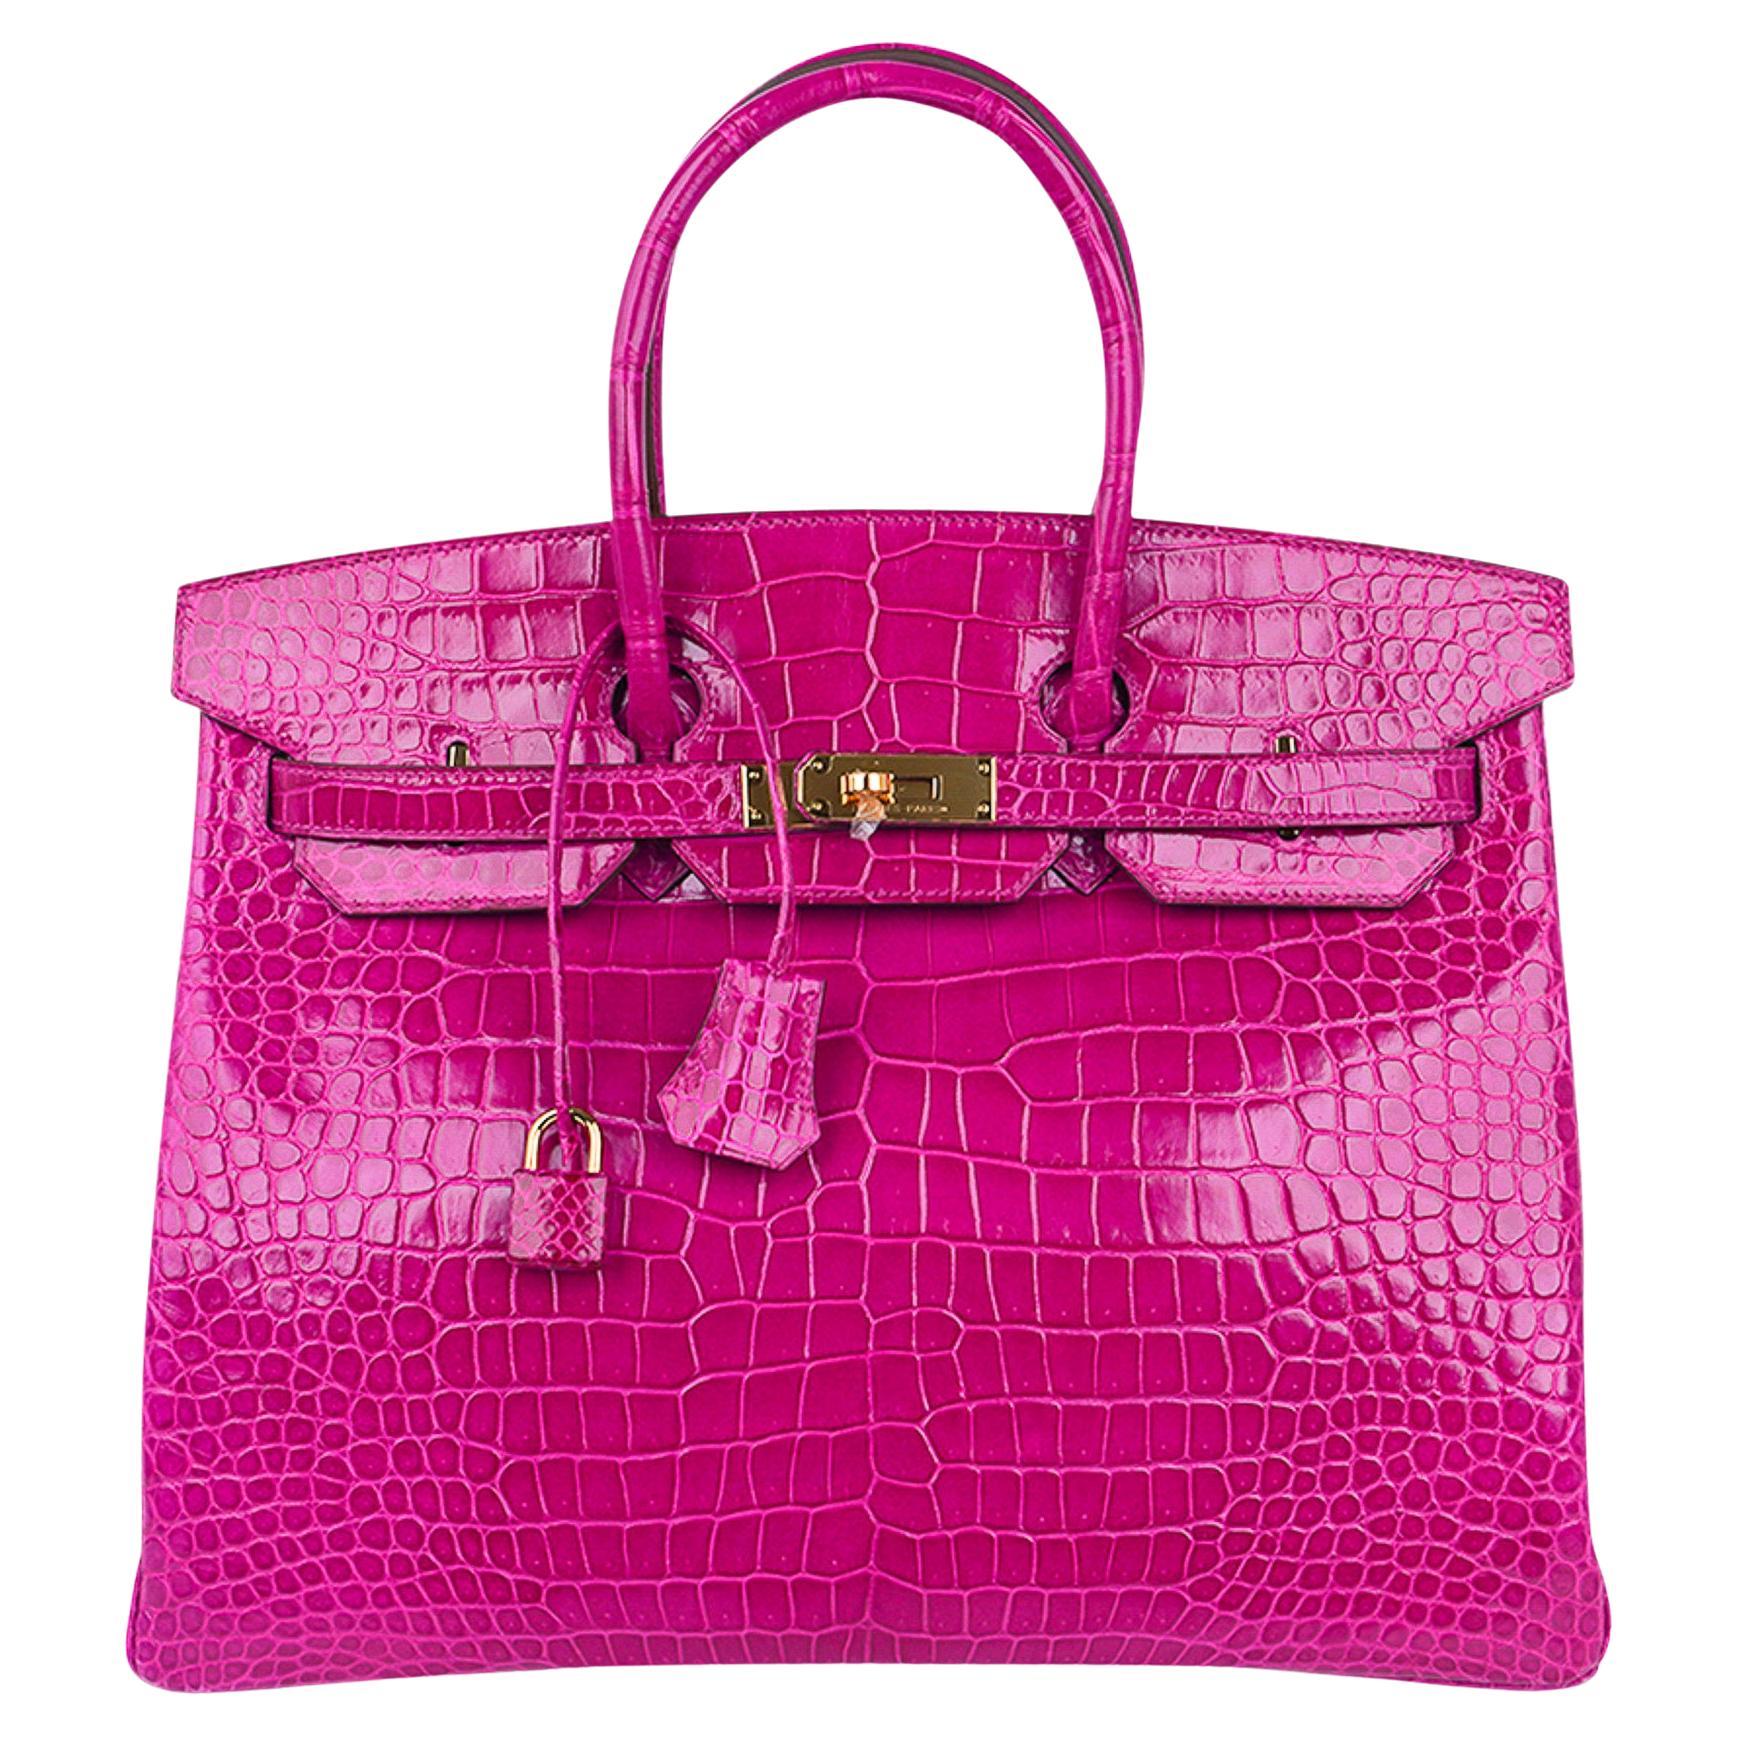 Sac Hermès Birkin 35 Rose Scheherazade en crocodile Porosus finitions métalliques dorées